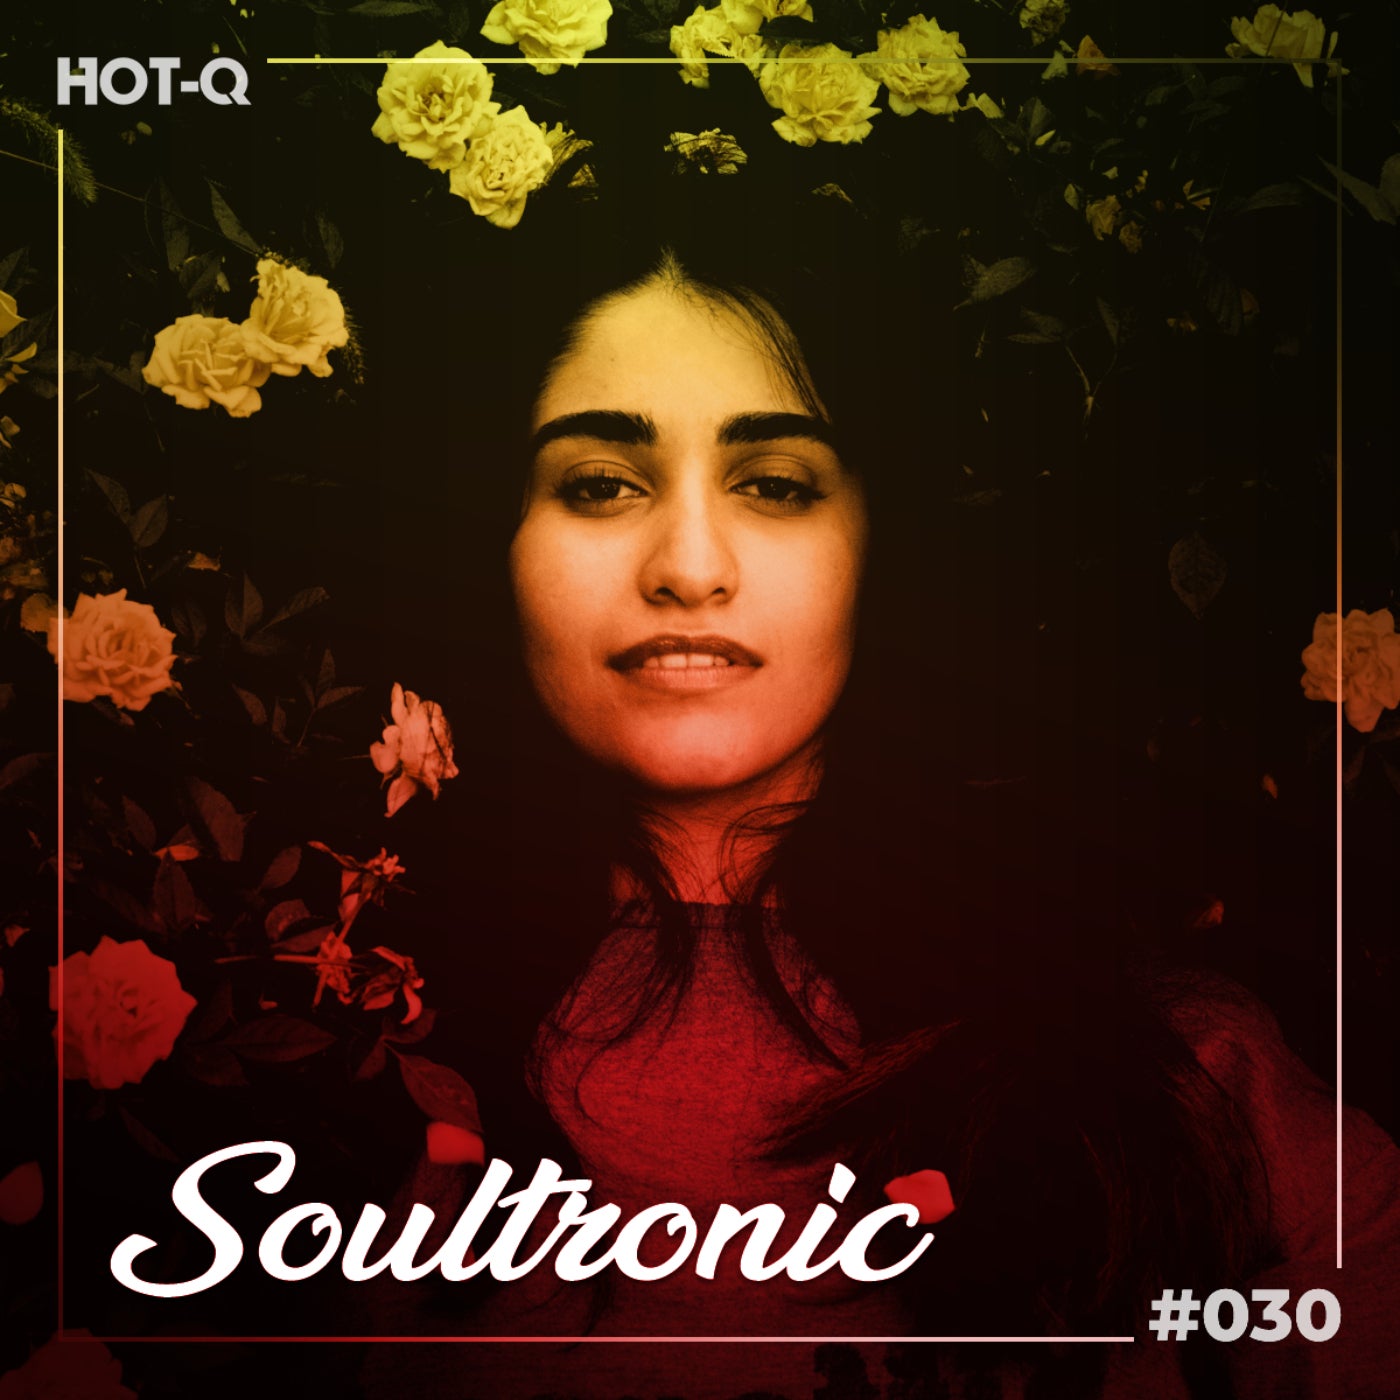 Soultronic 030